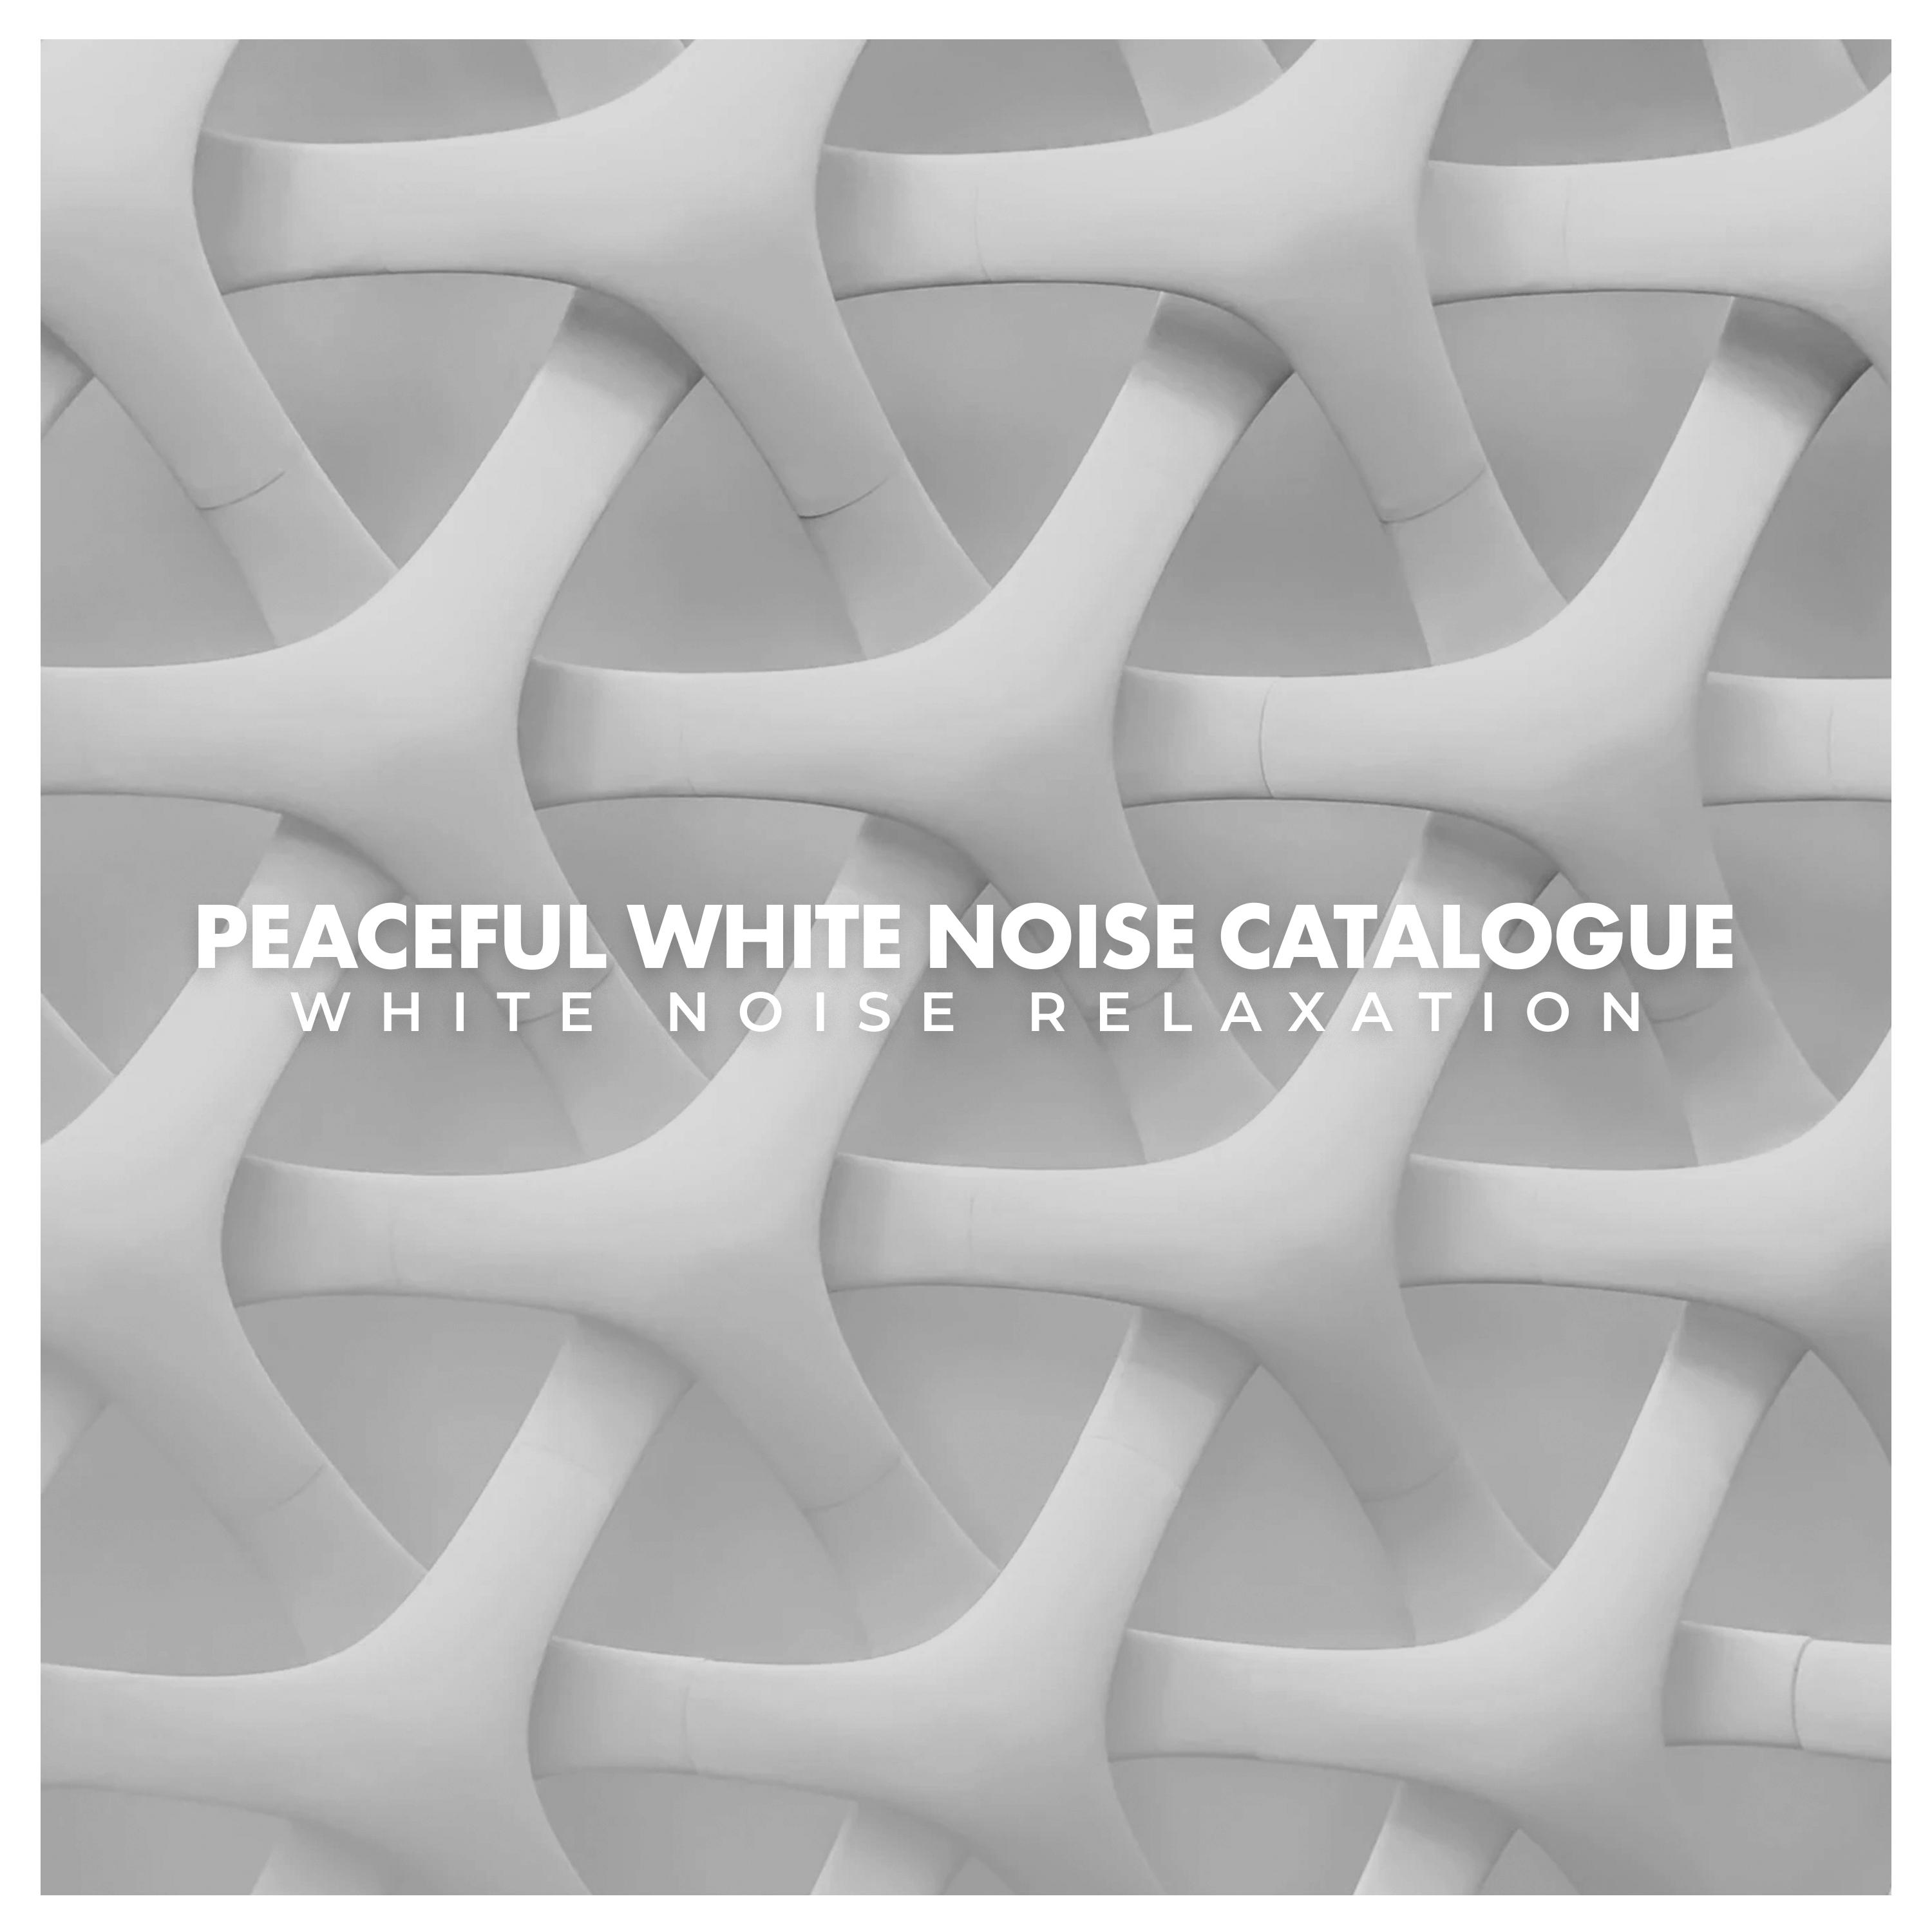 Peaceful White Noise Catalogue